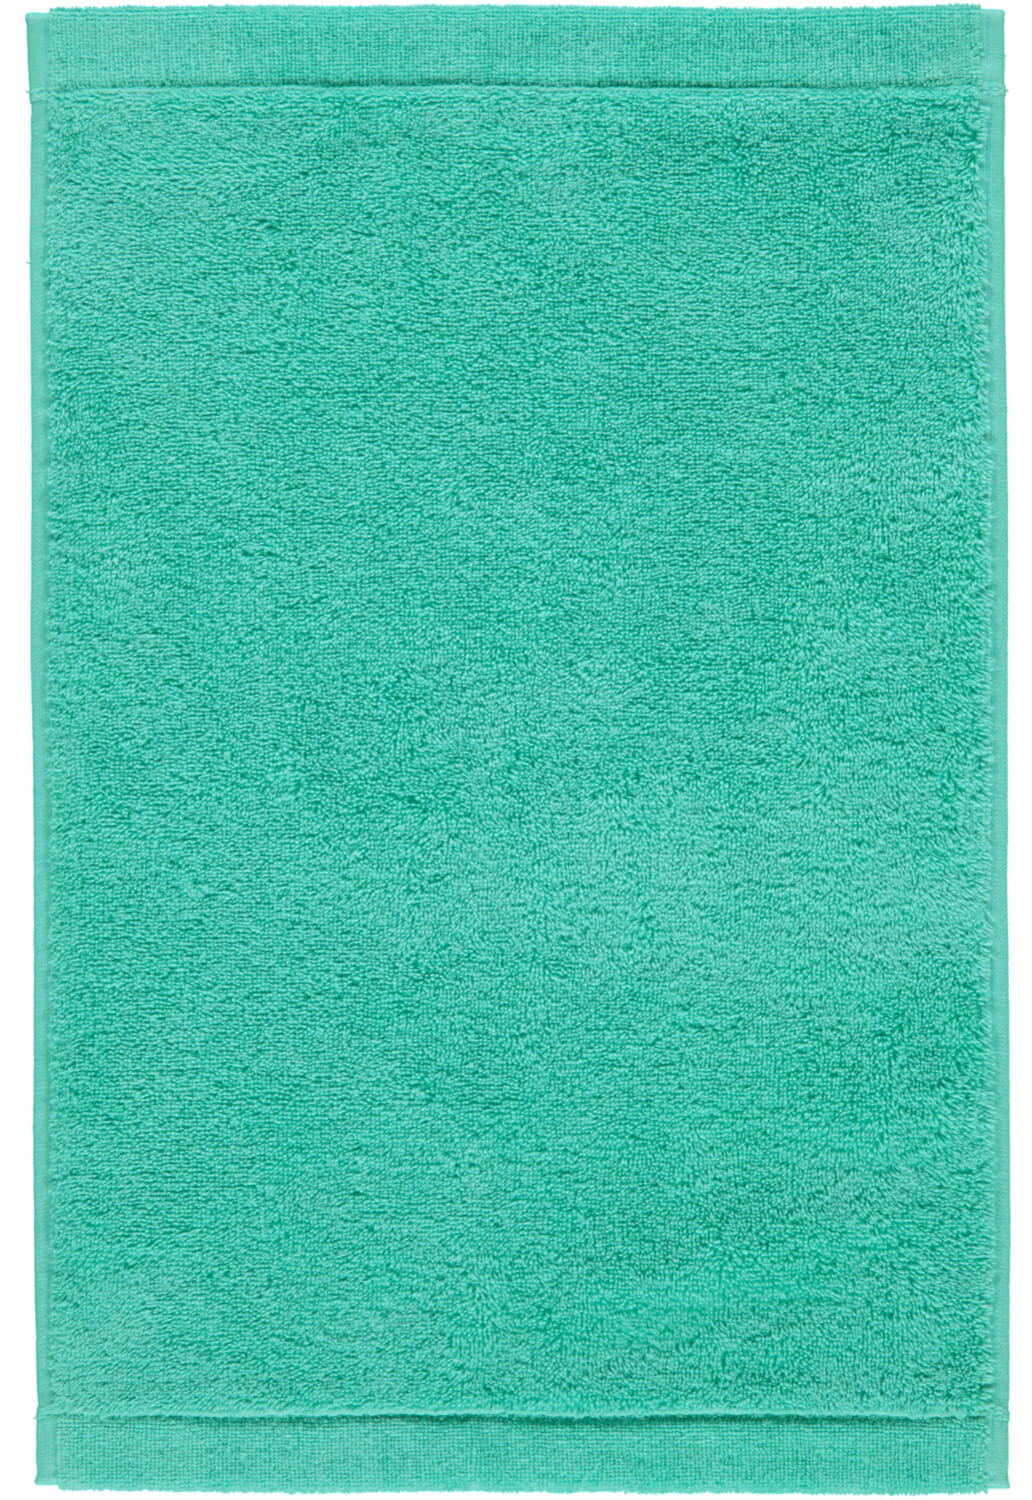 Банное полотенце Lifestyle Pappermint ☞ Размер: 70 x 140 см